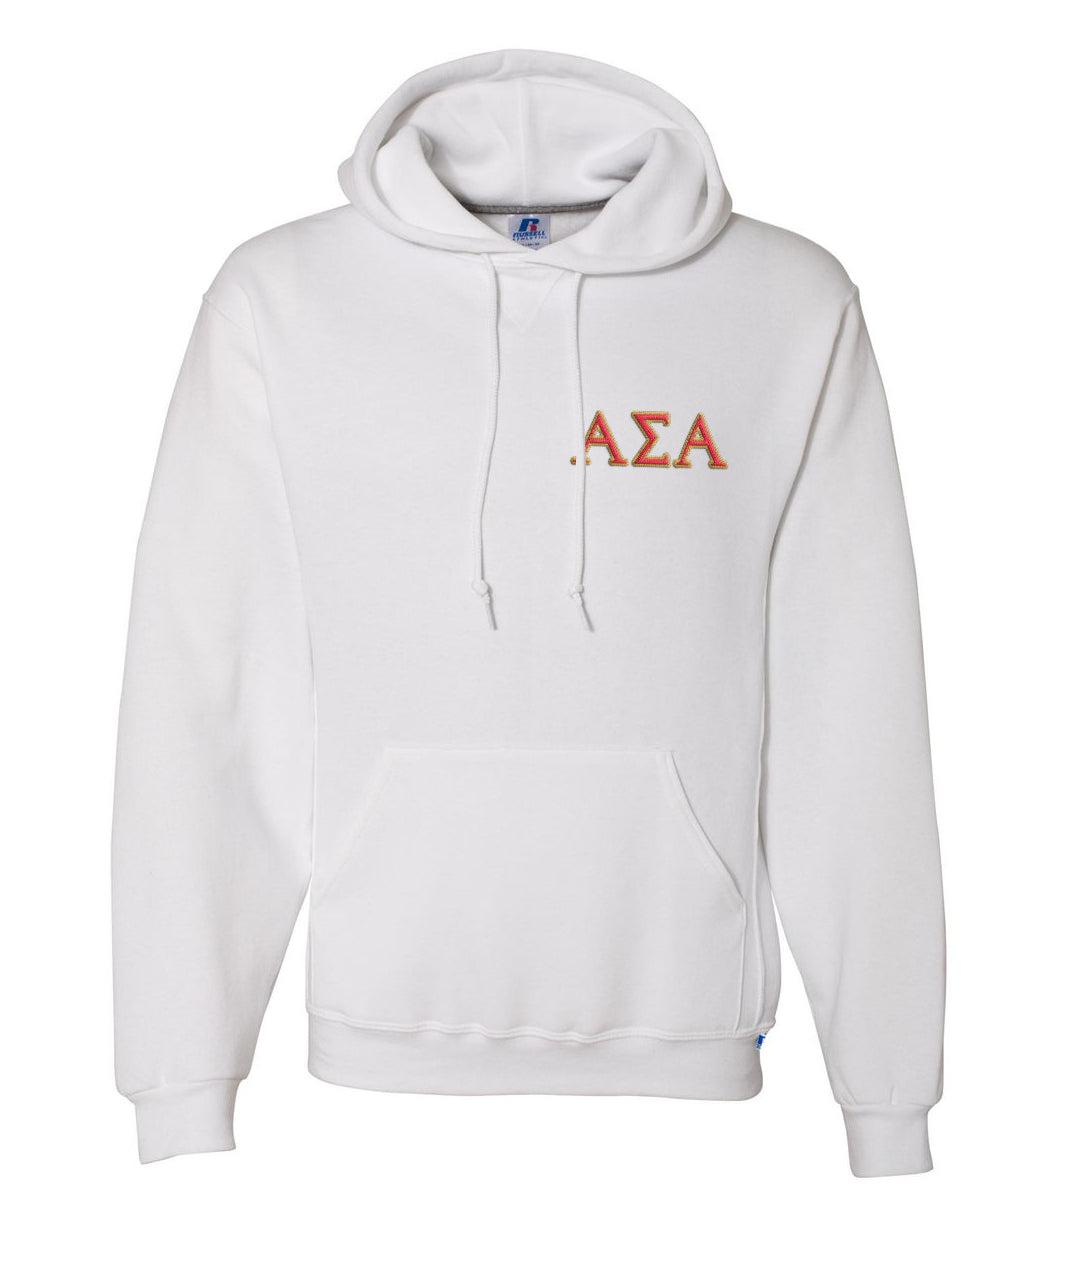 Alpha Sigma Alpha Embroidered Hoodie